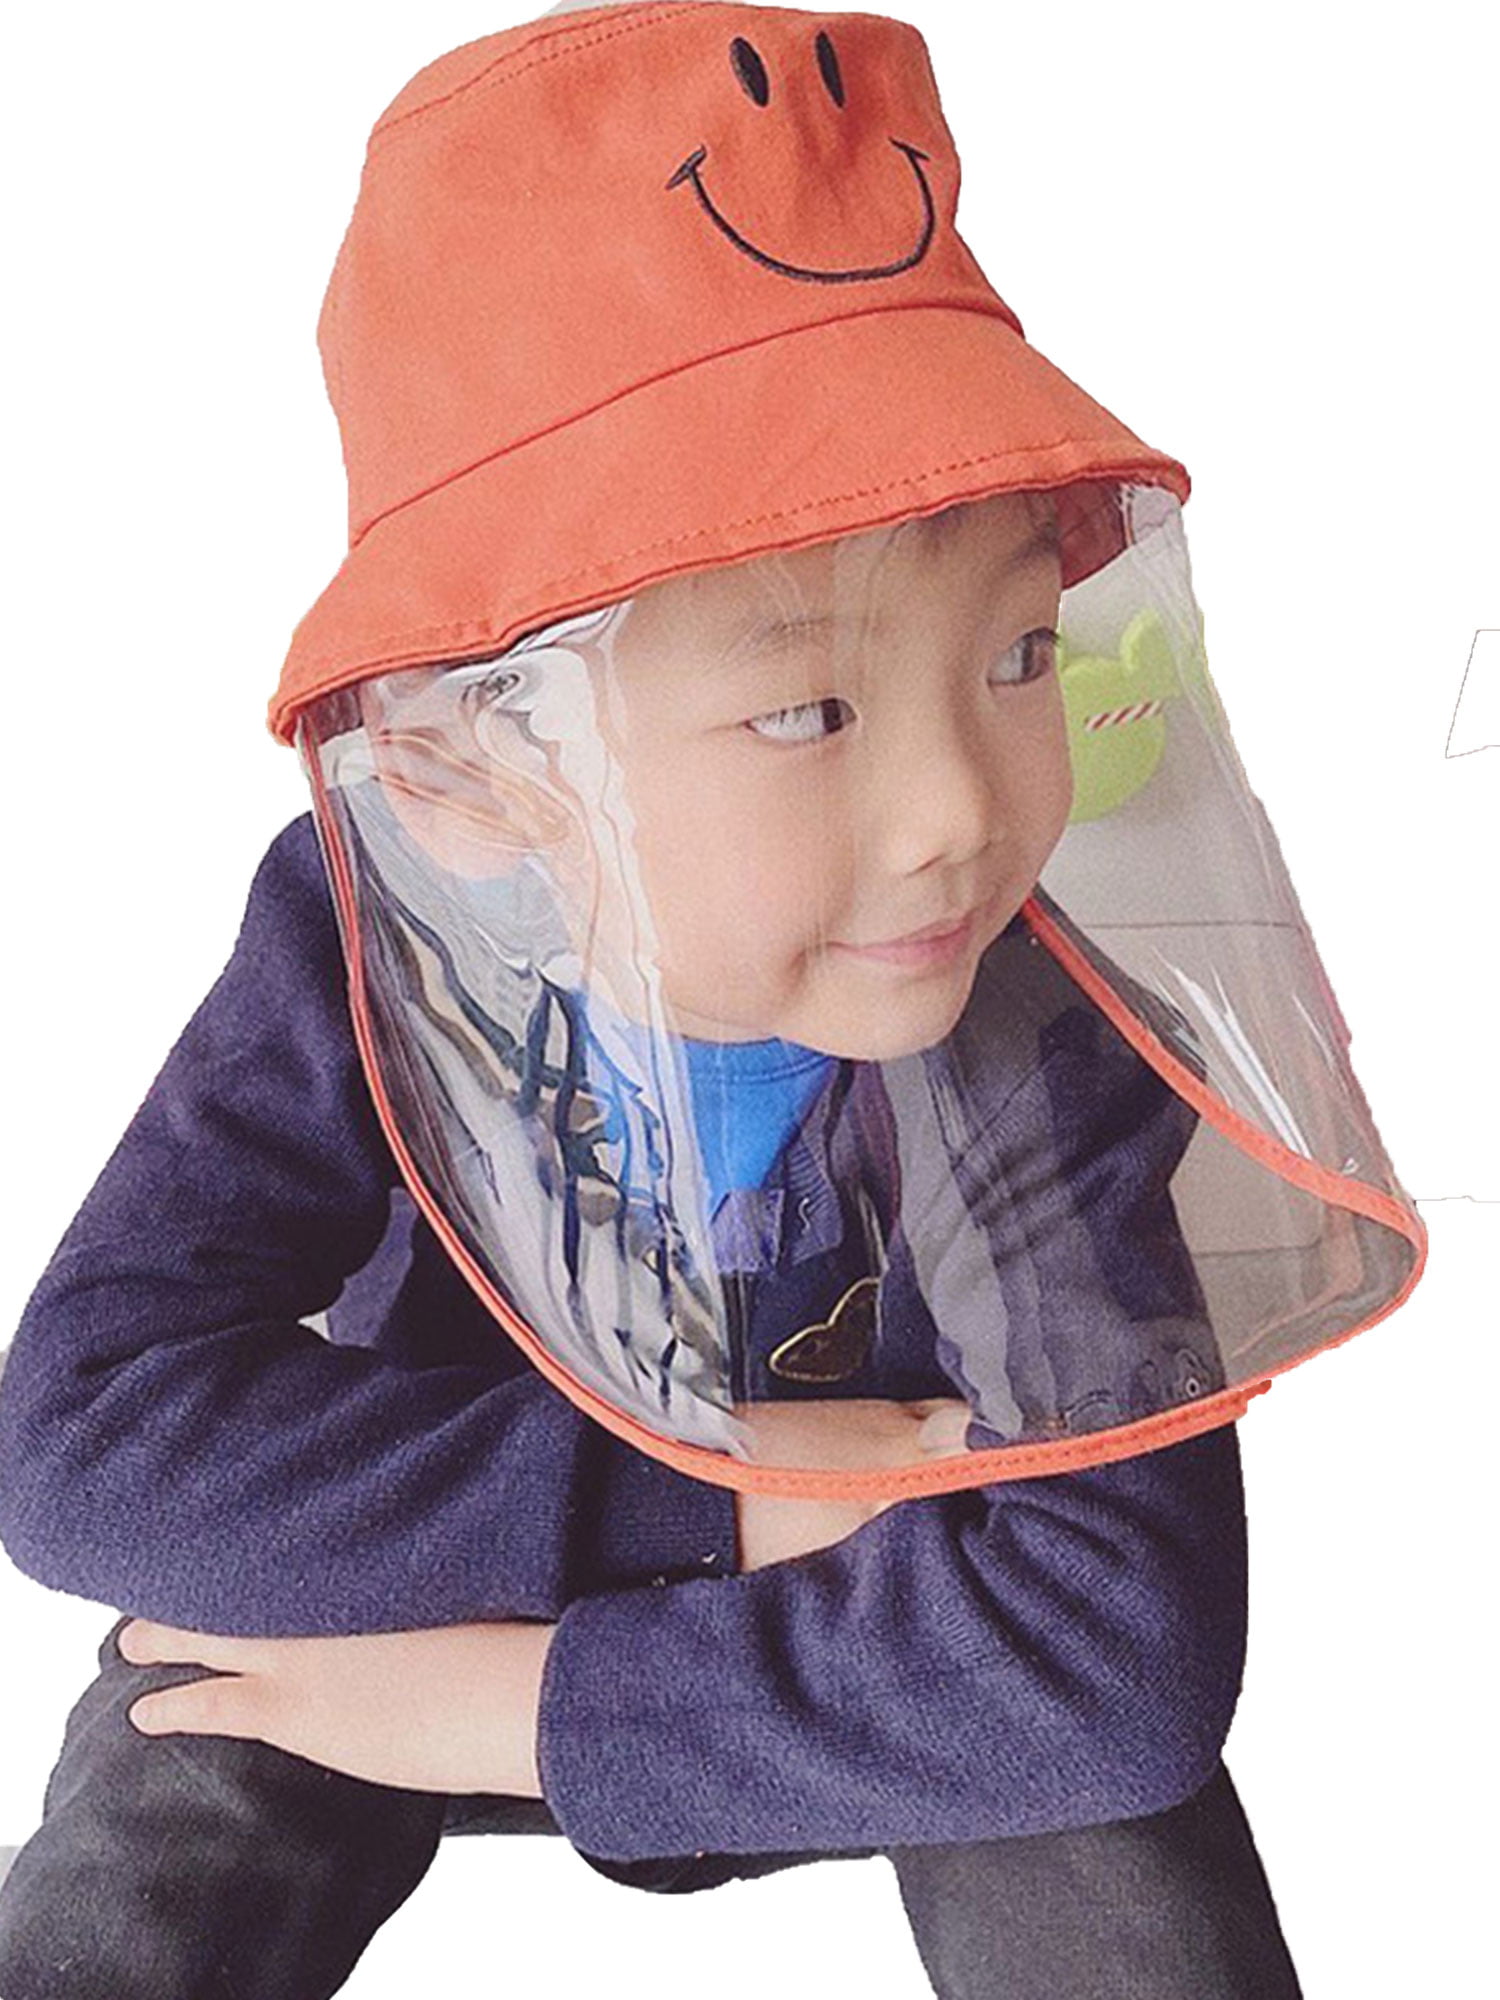 Kids Bucket Hat Outdoor Sun Protection Hat Dustproof Cap for Boys and Girls 